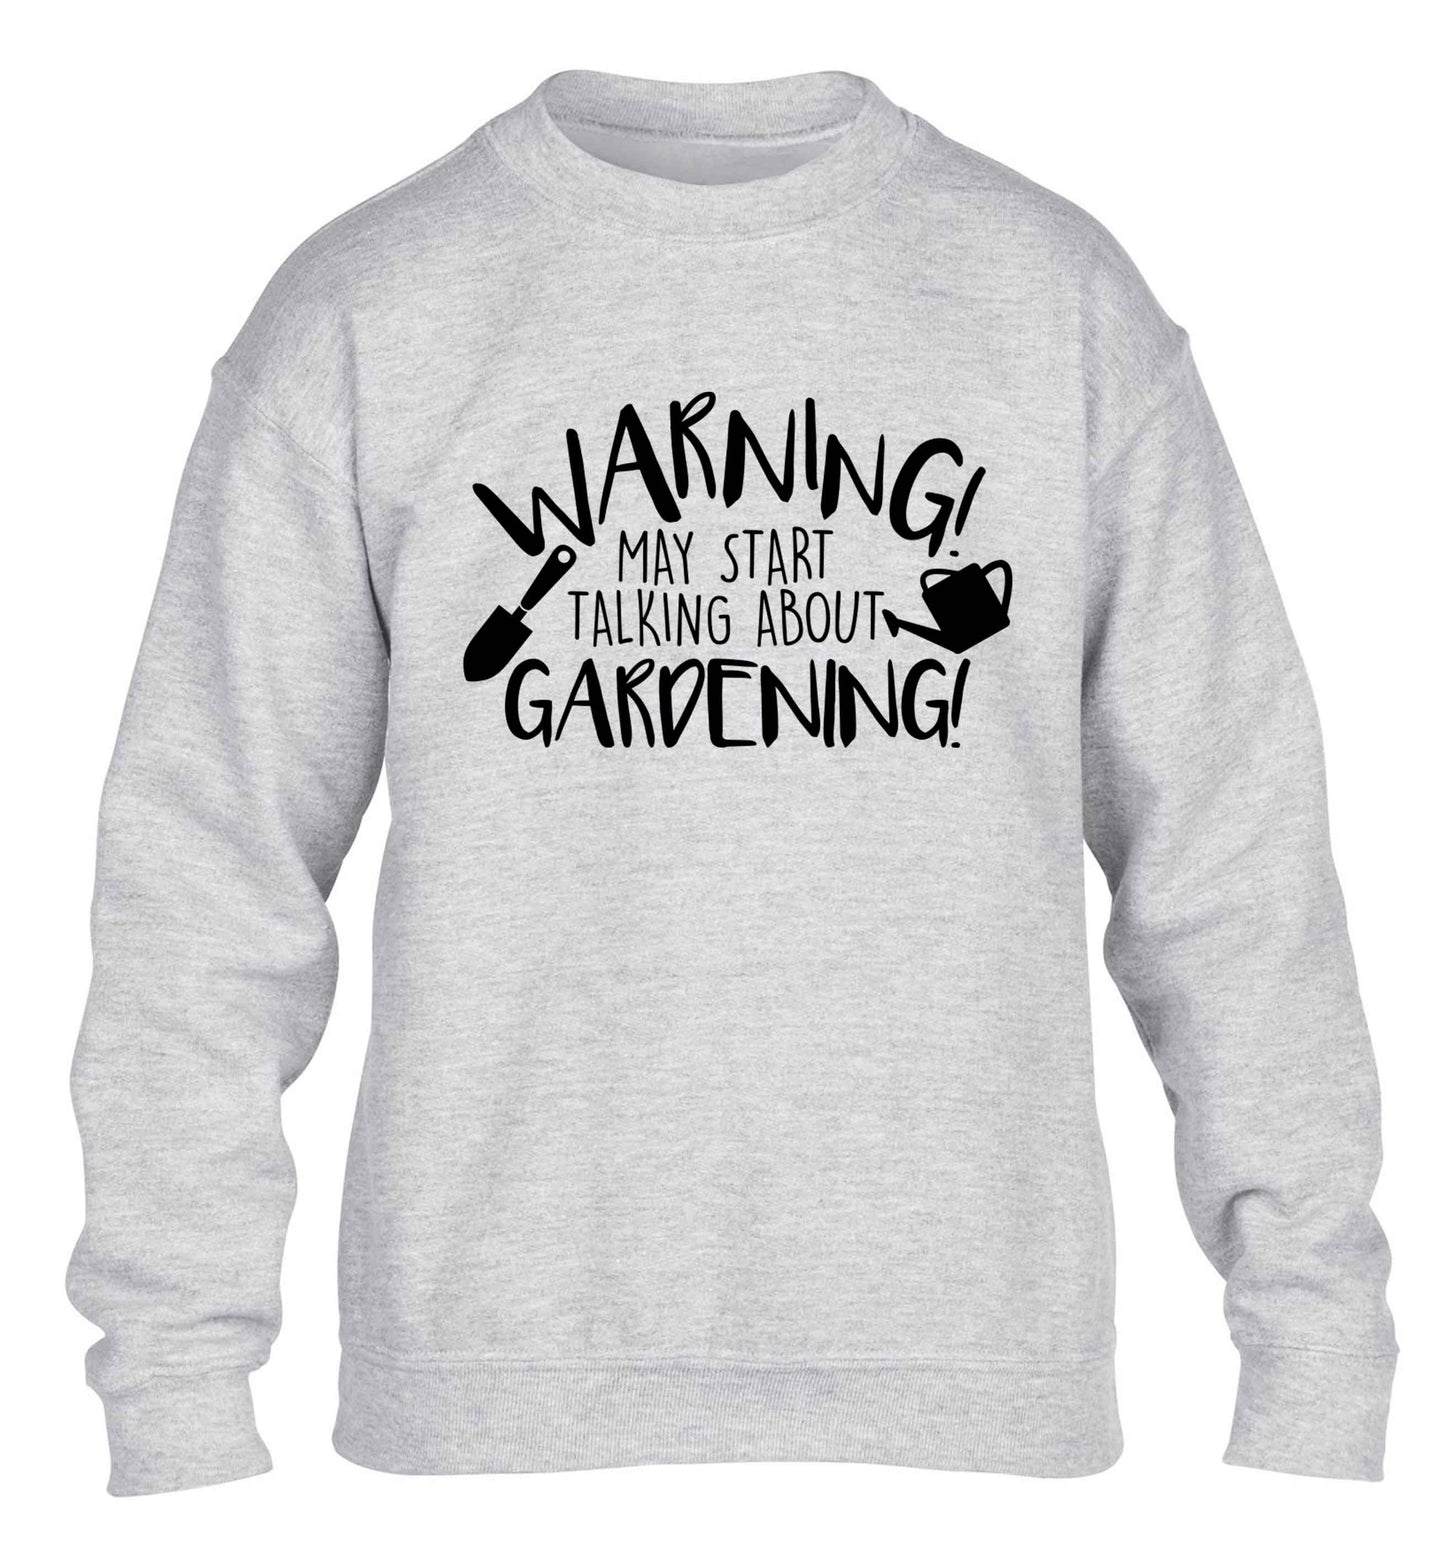 Warning may start talking about gardening children's grey sweater 12-13 Years